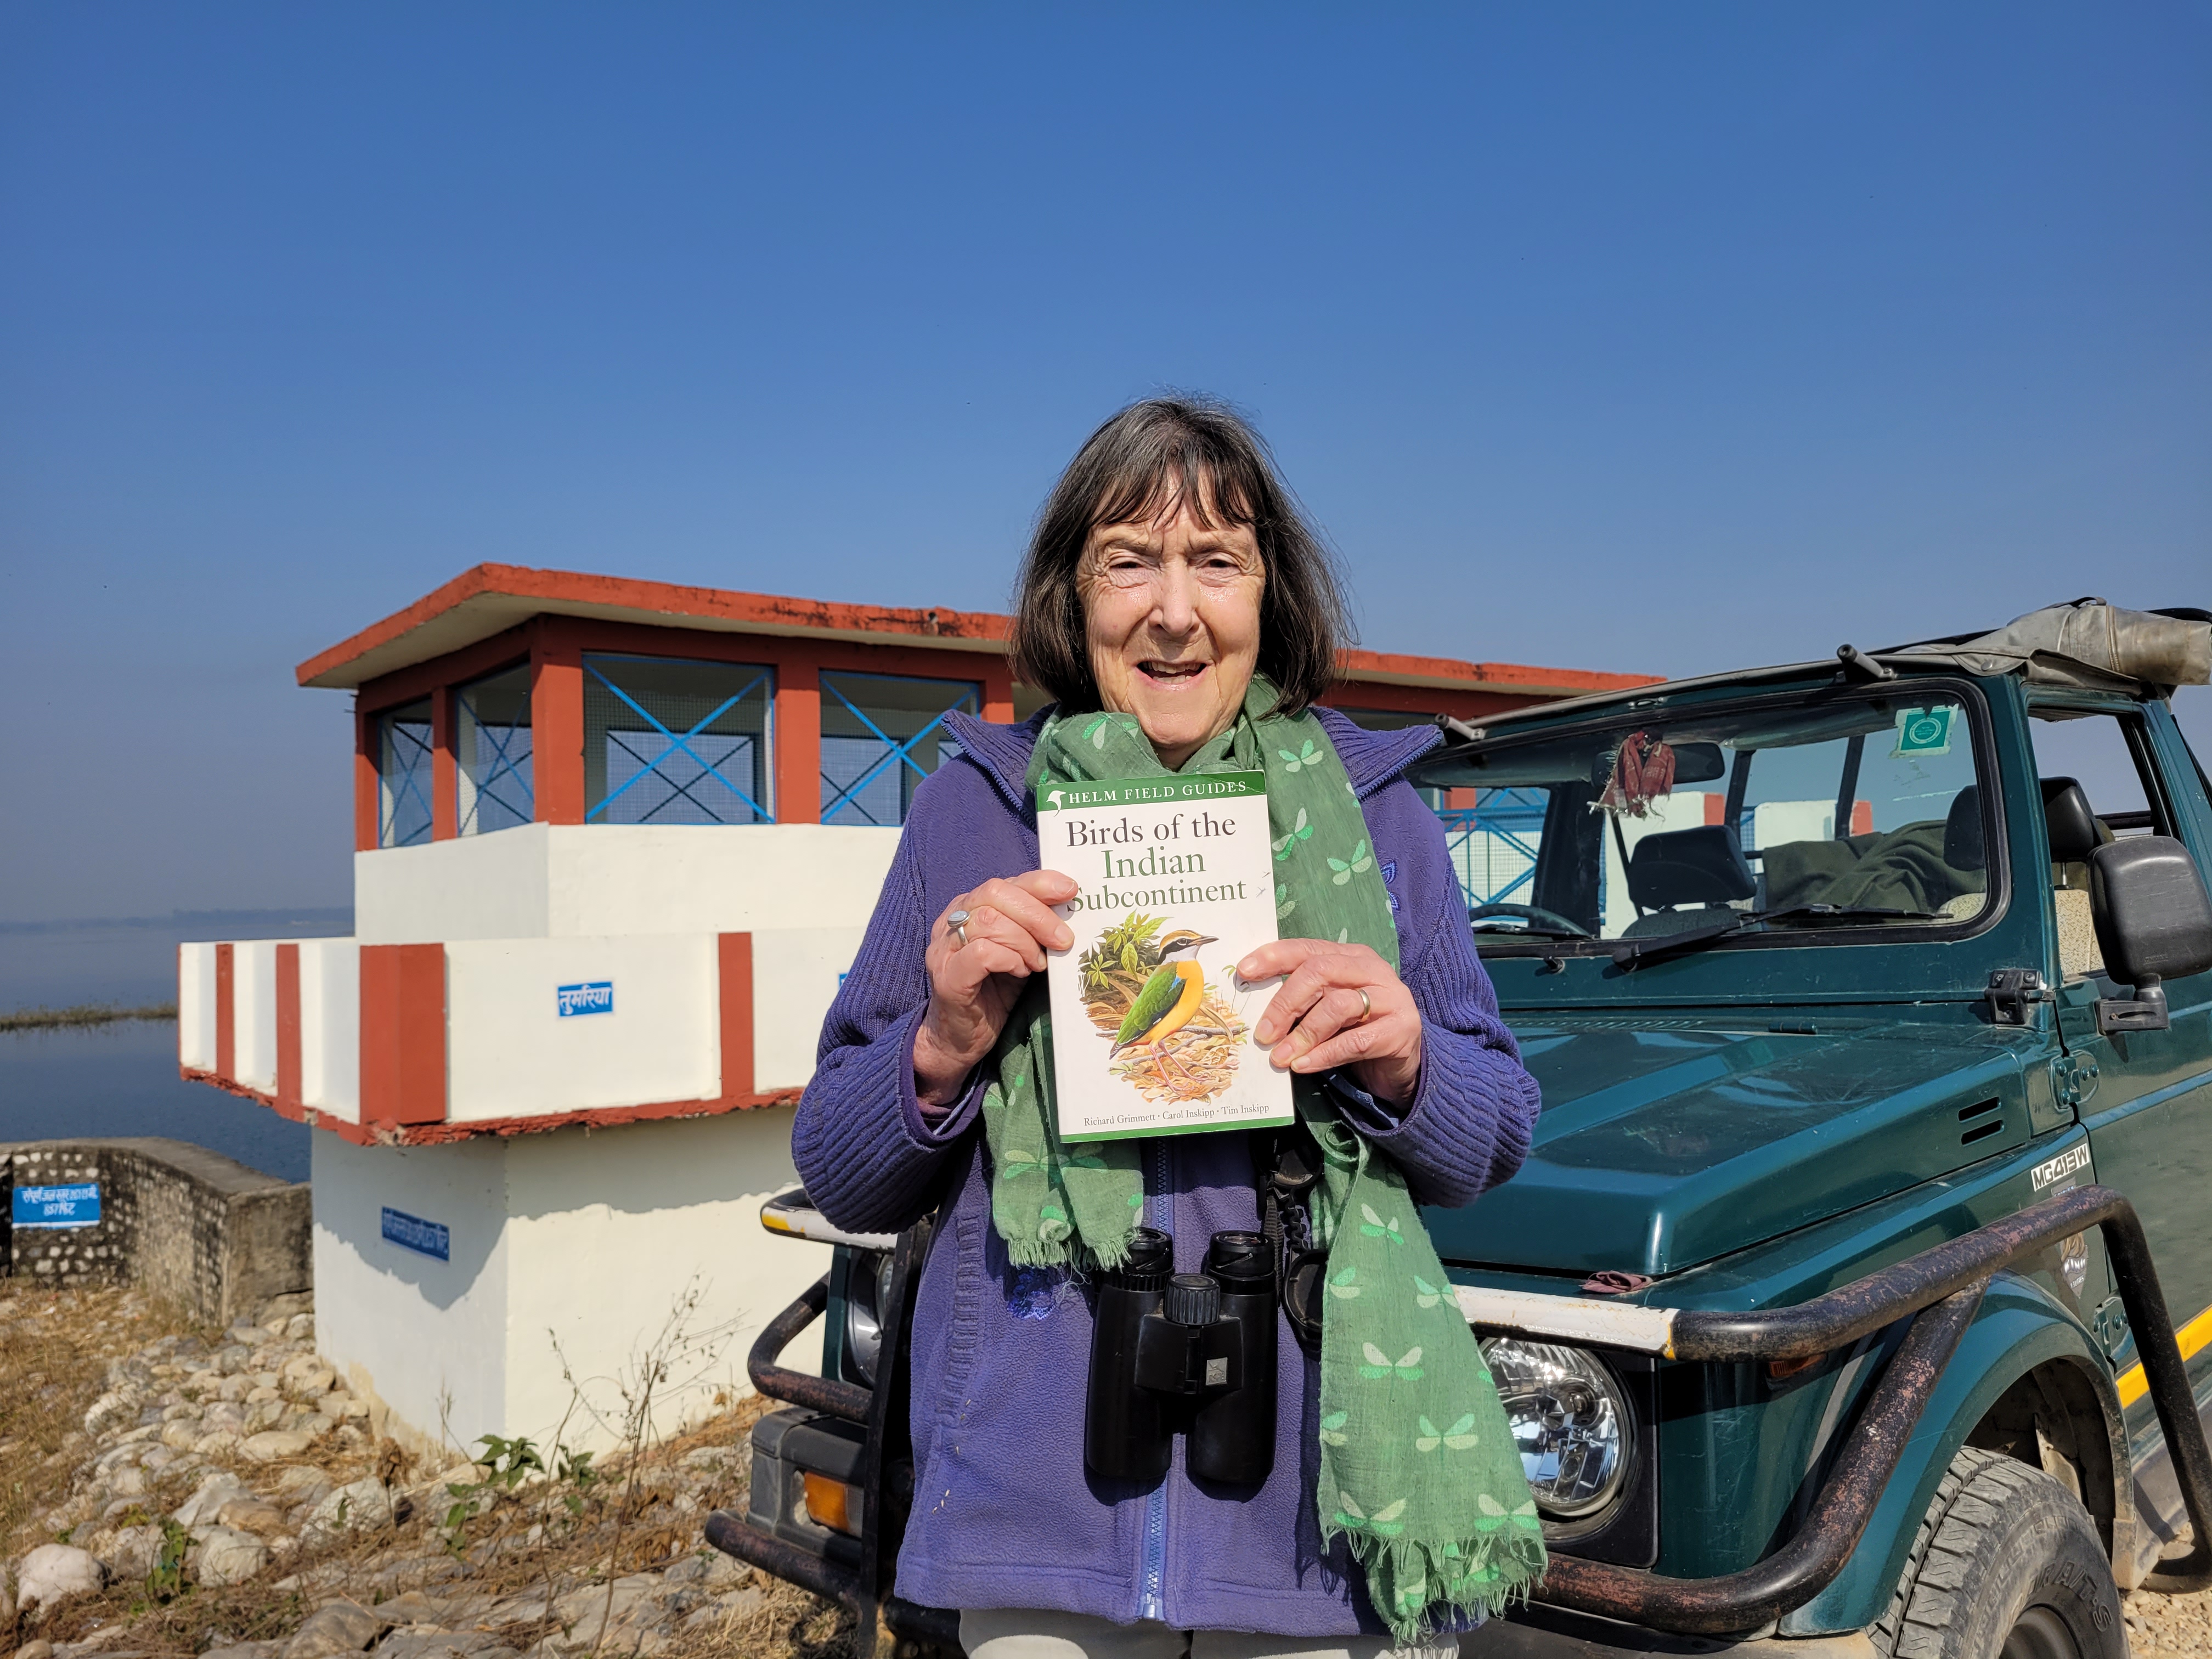 Jim Corbett Become India's Best Birding Destination, Says Legendary British Ornithologist Carol Inskipp